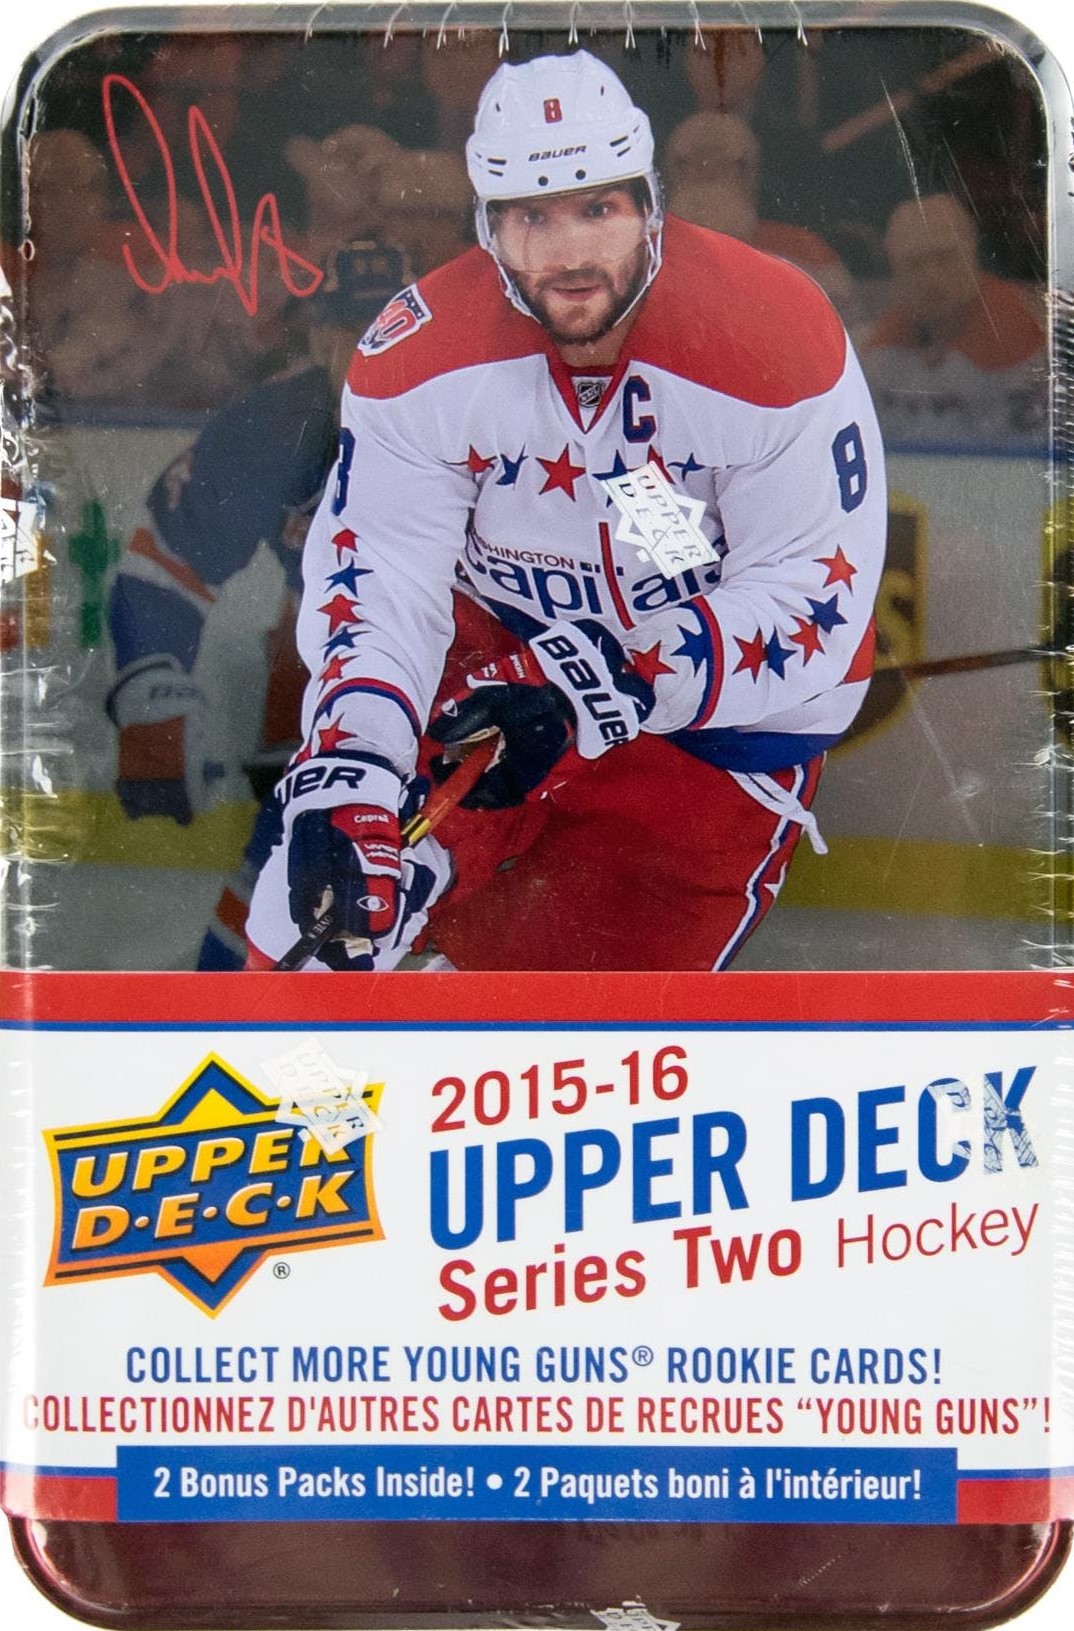 2015-16 Upper Deck Series 2 Hockey TIN Retail Box